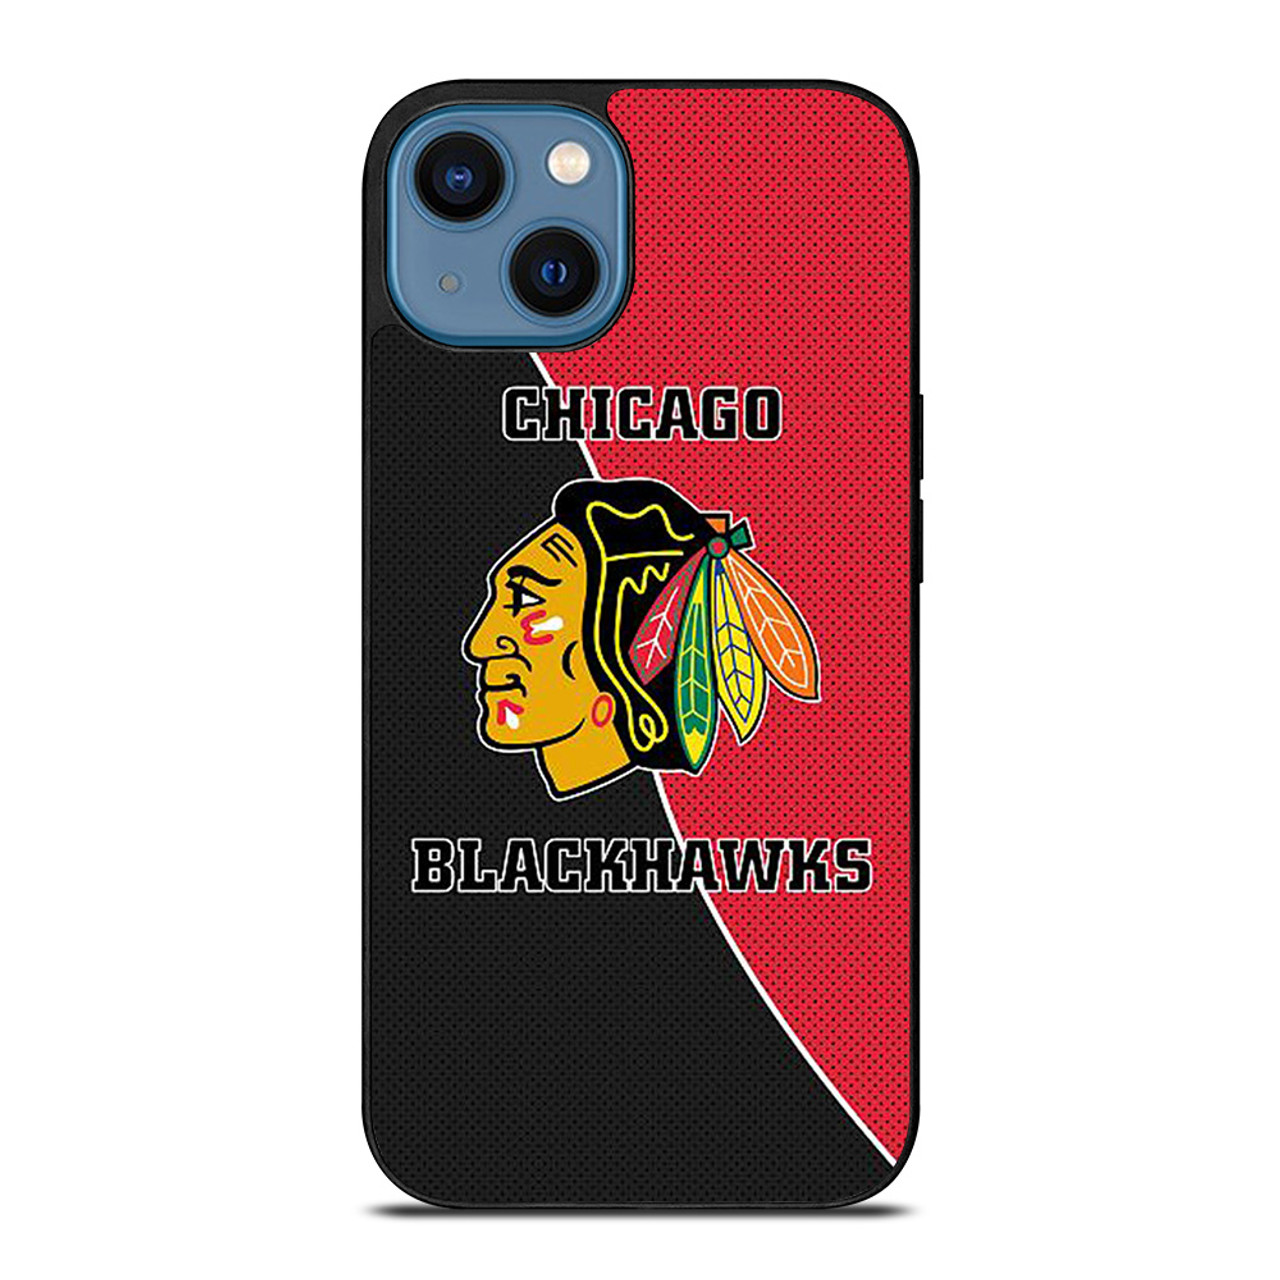 Chicago Blackhawks Lineup iPhone 12 Waterproof Case